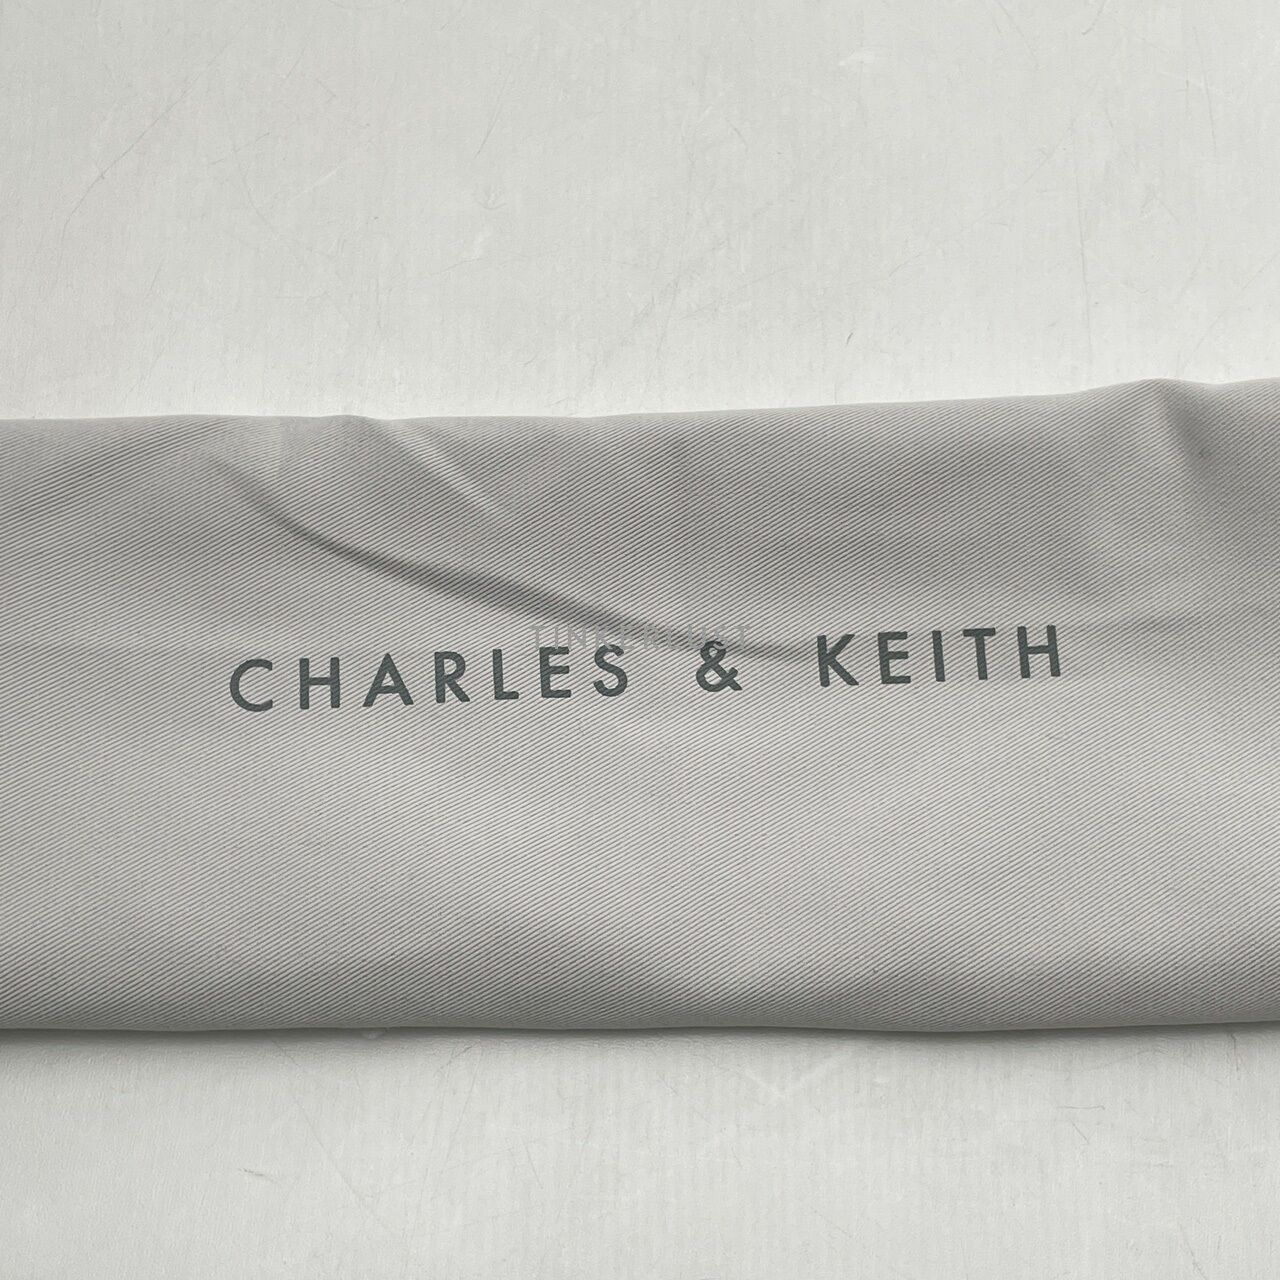 Charles & Keith Olive Sling Bag